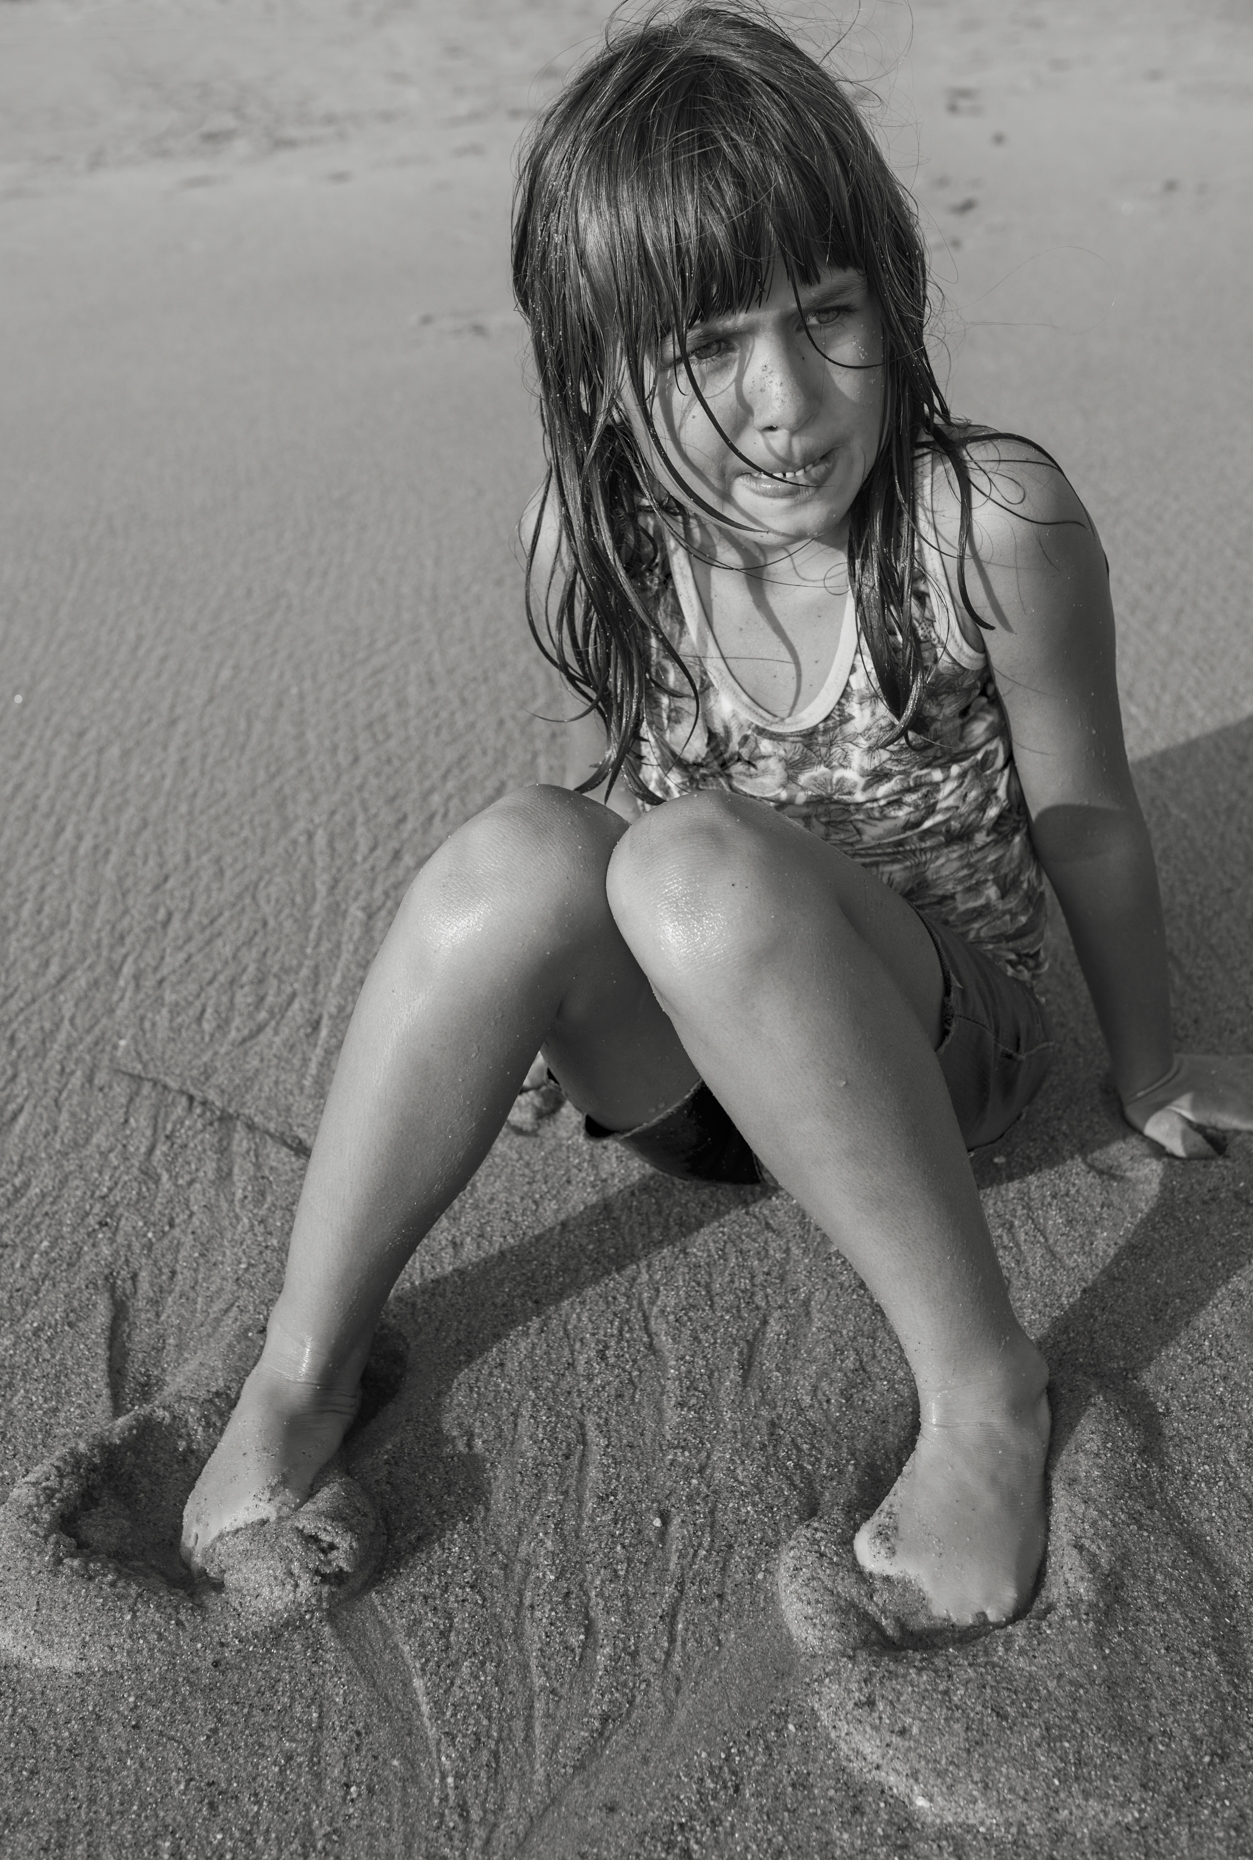 remi kids photography missouri LA Laguna beach oslo paris london madrid milan-5